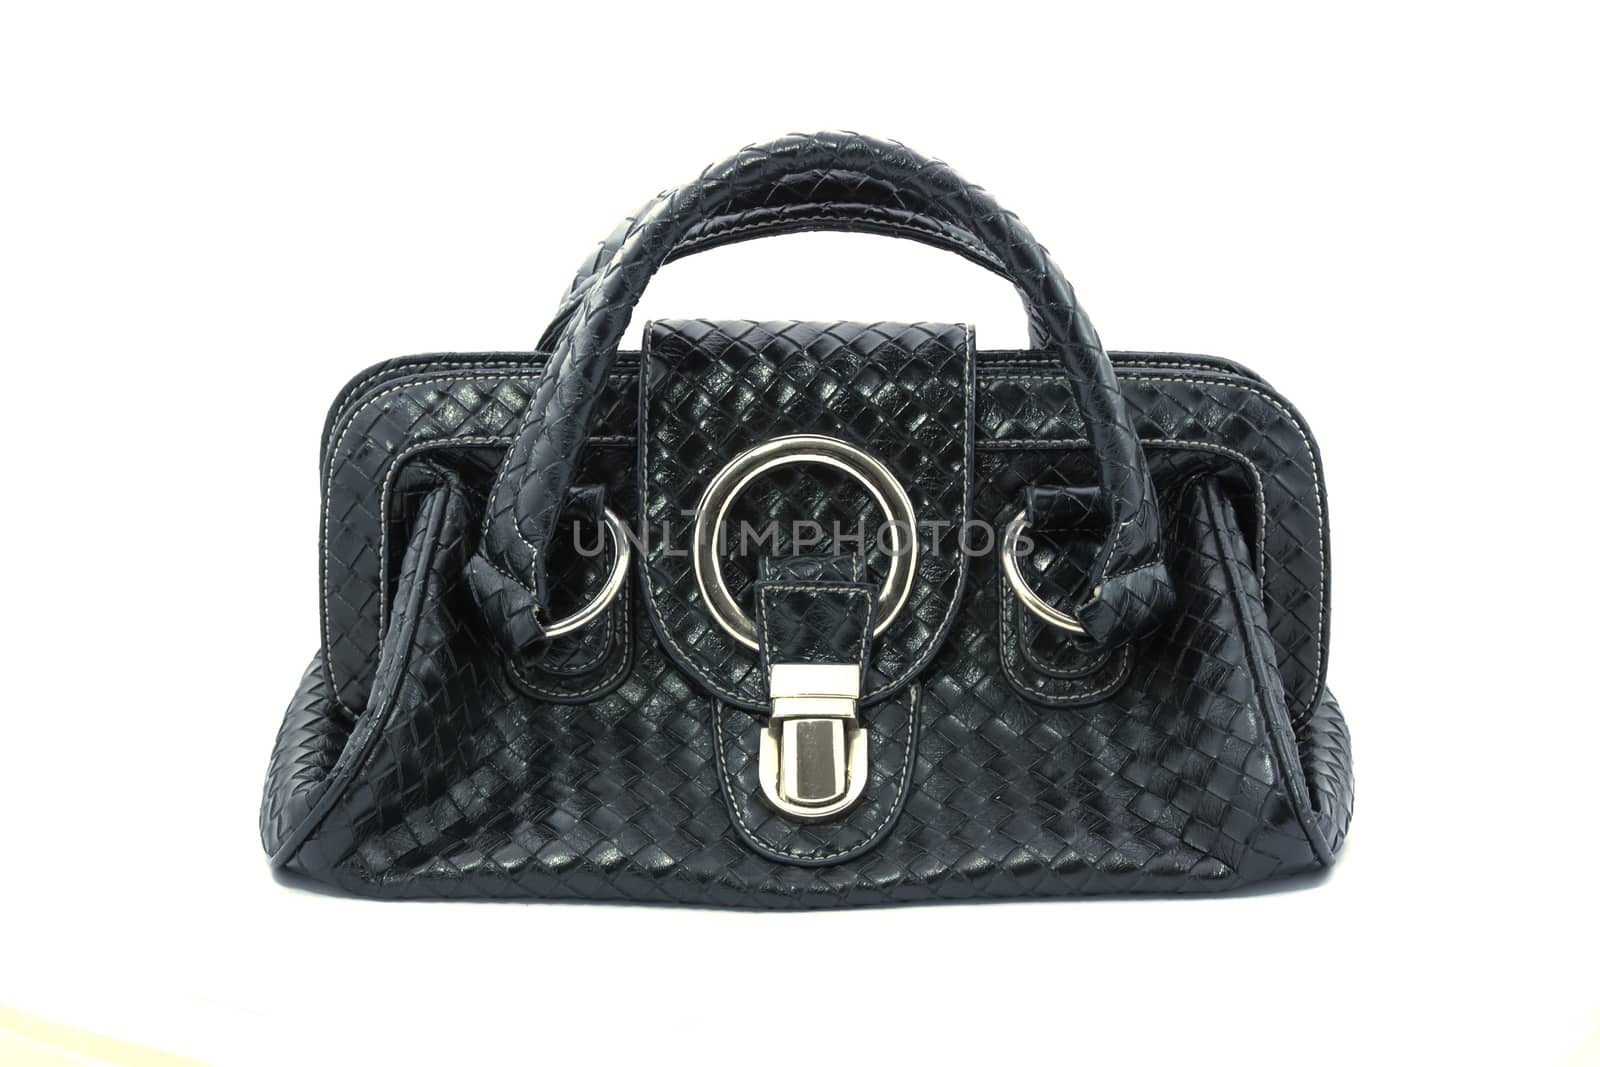 woman handbag by taesmileland